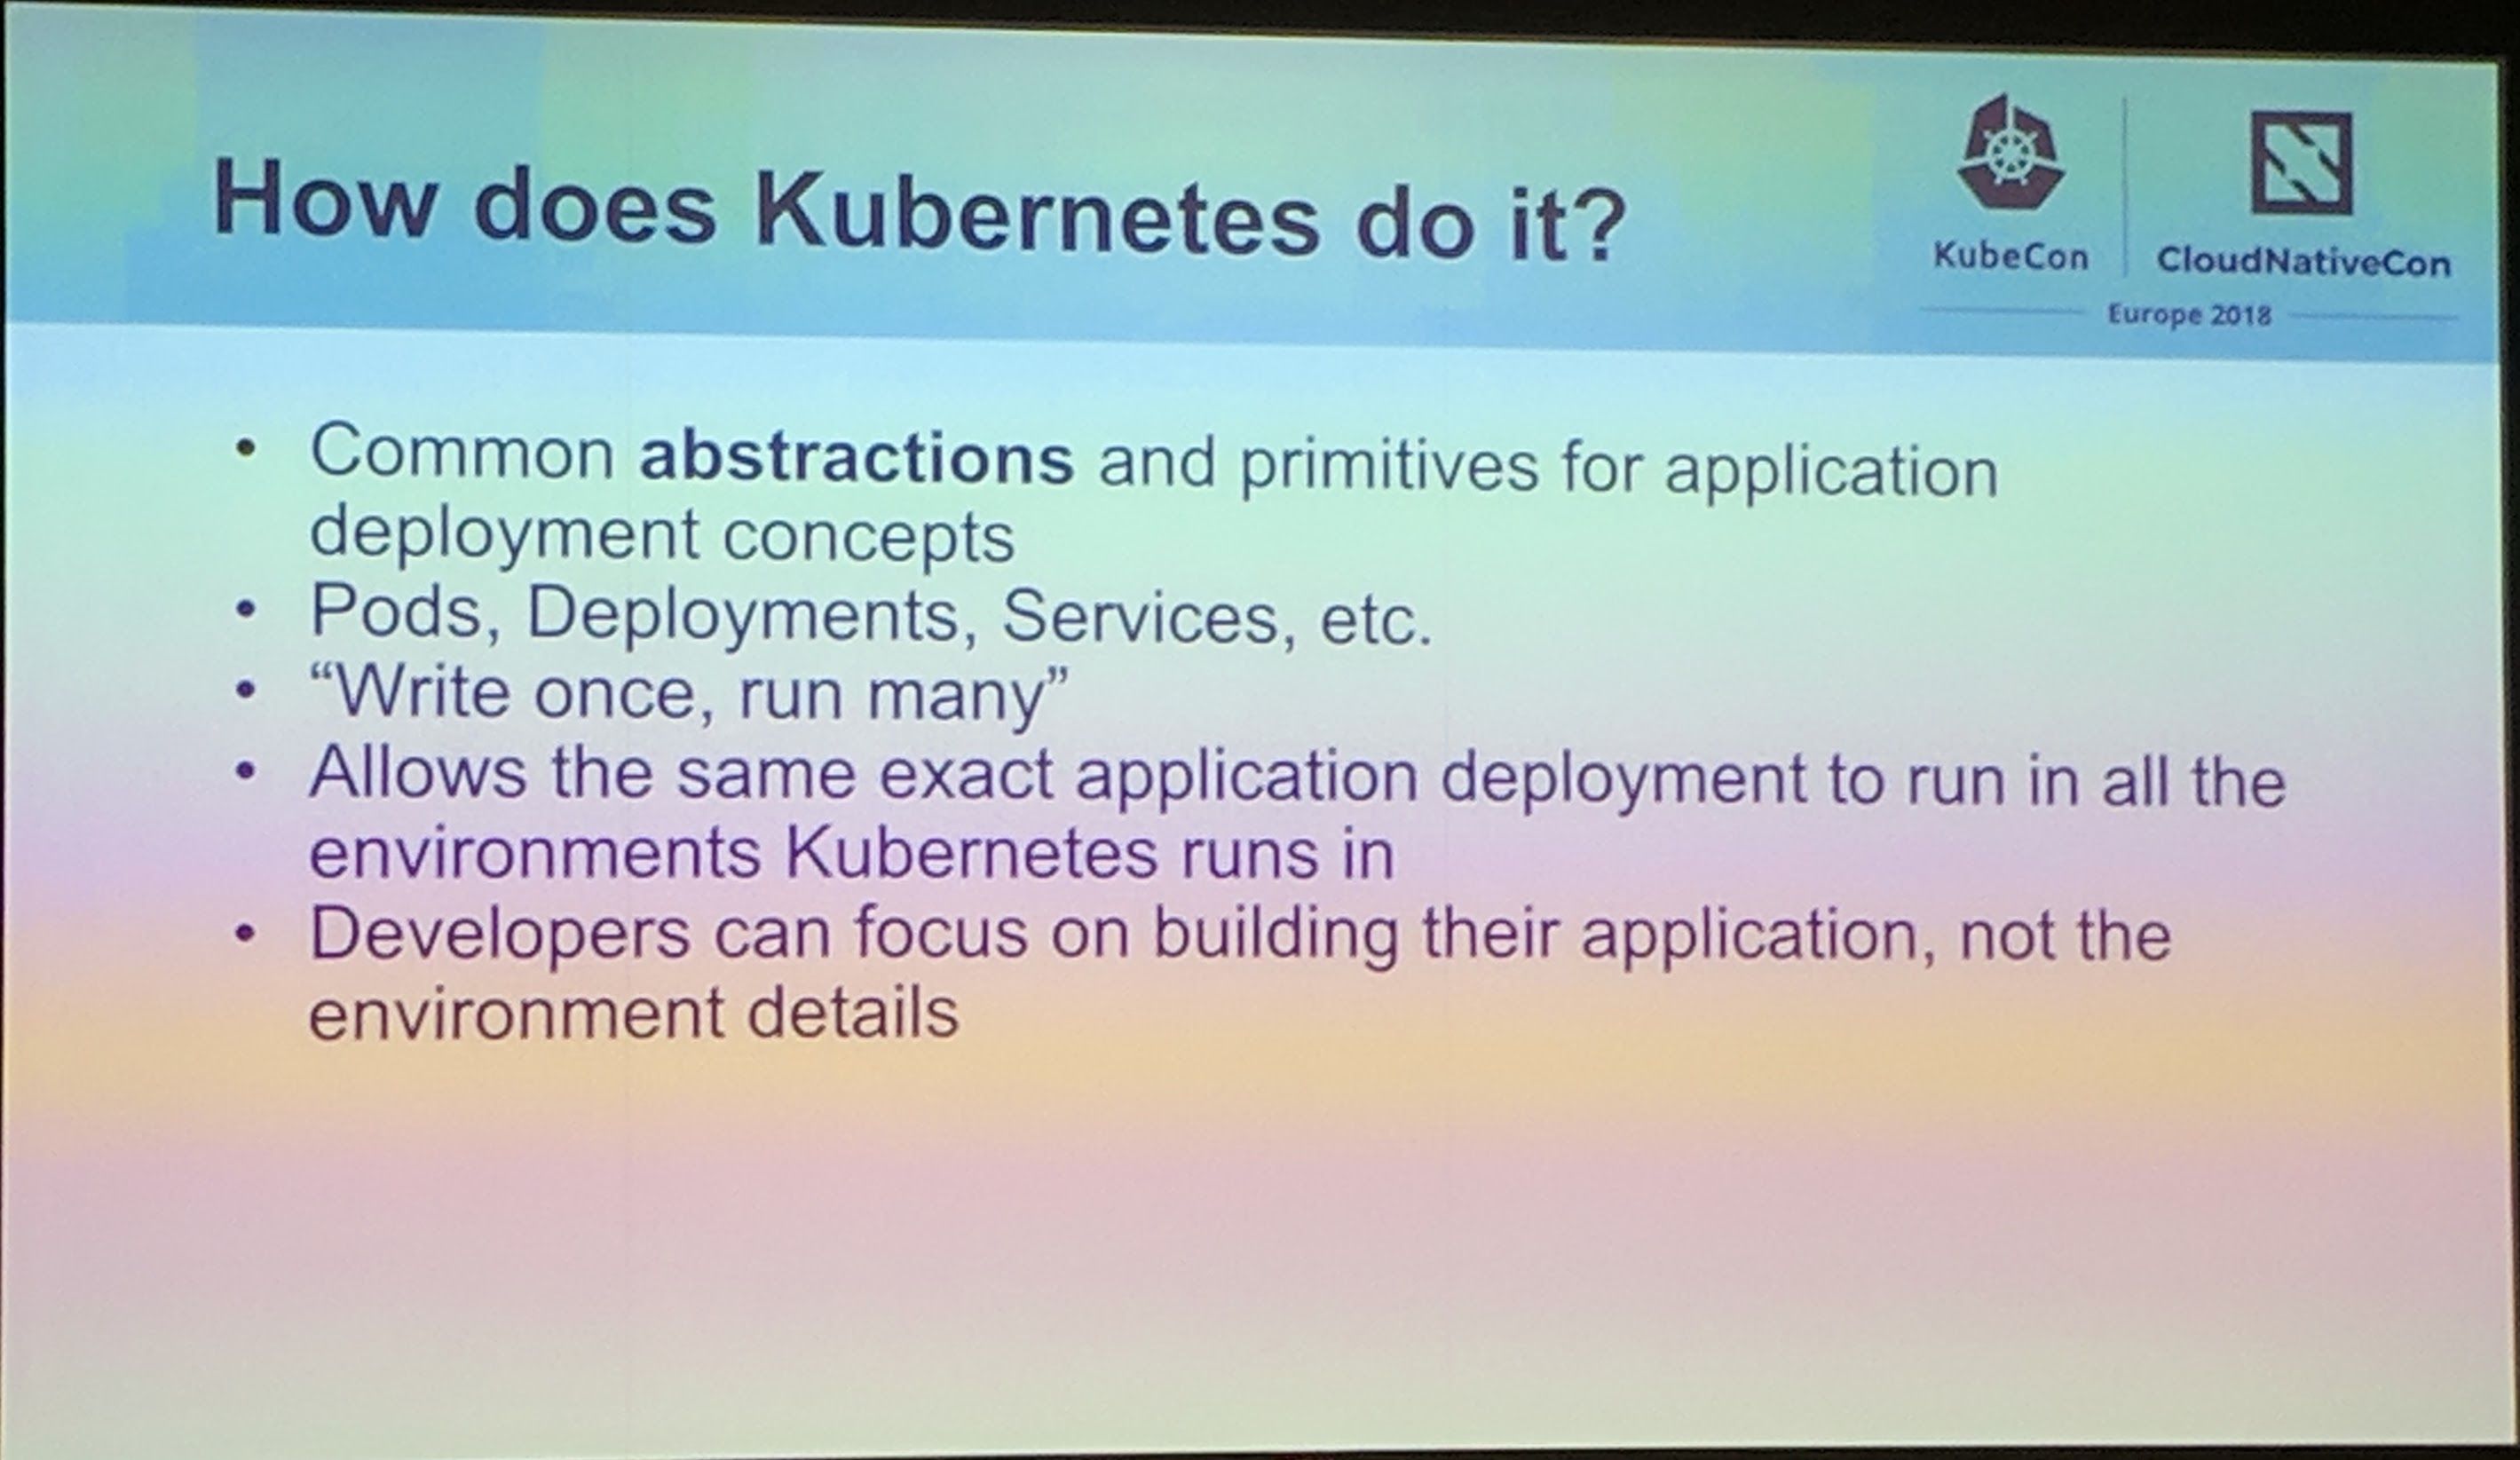 KubeCon - Talk - Kubernetes Runs Anywhere, but Does your Data? - How does Kubernetes do it?